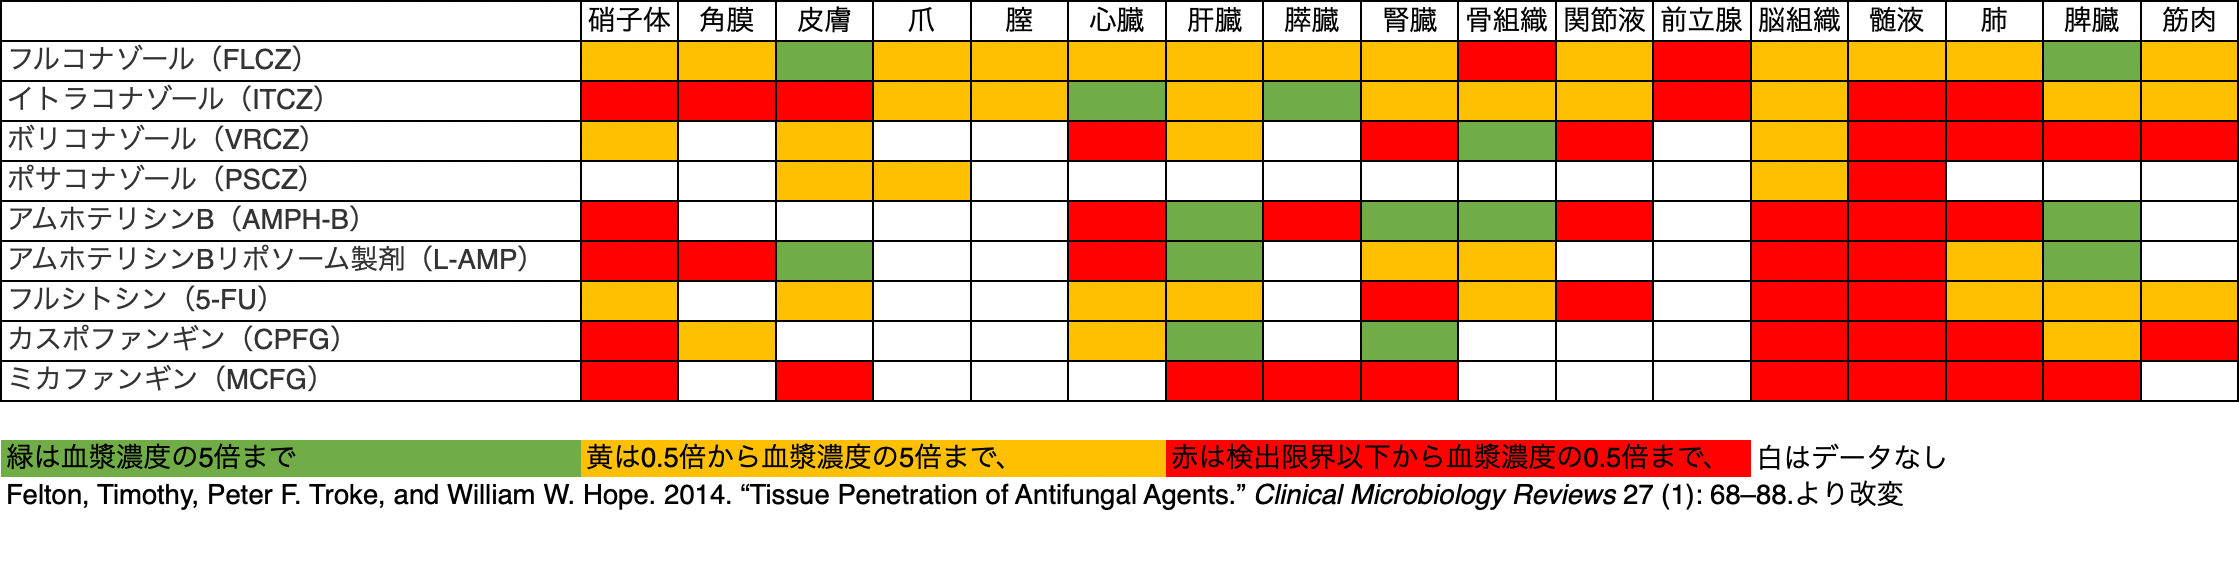 抗真菌薬の組織移行性